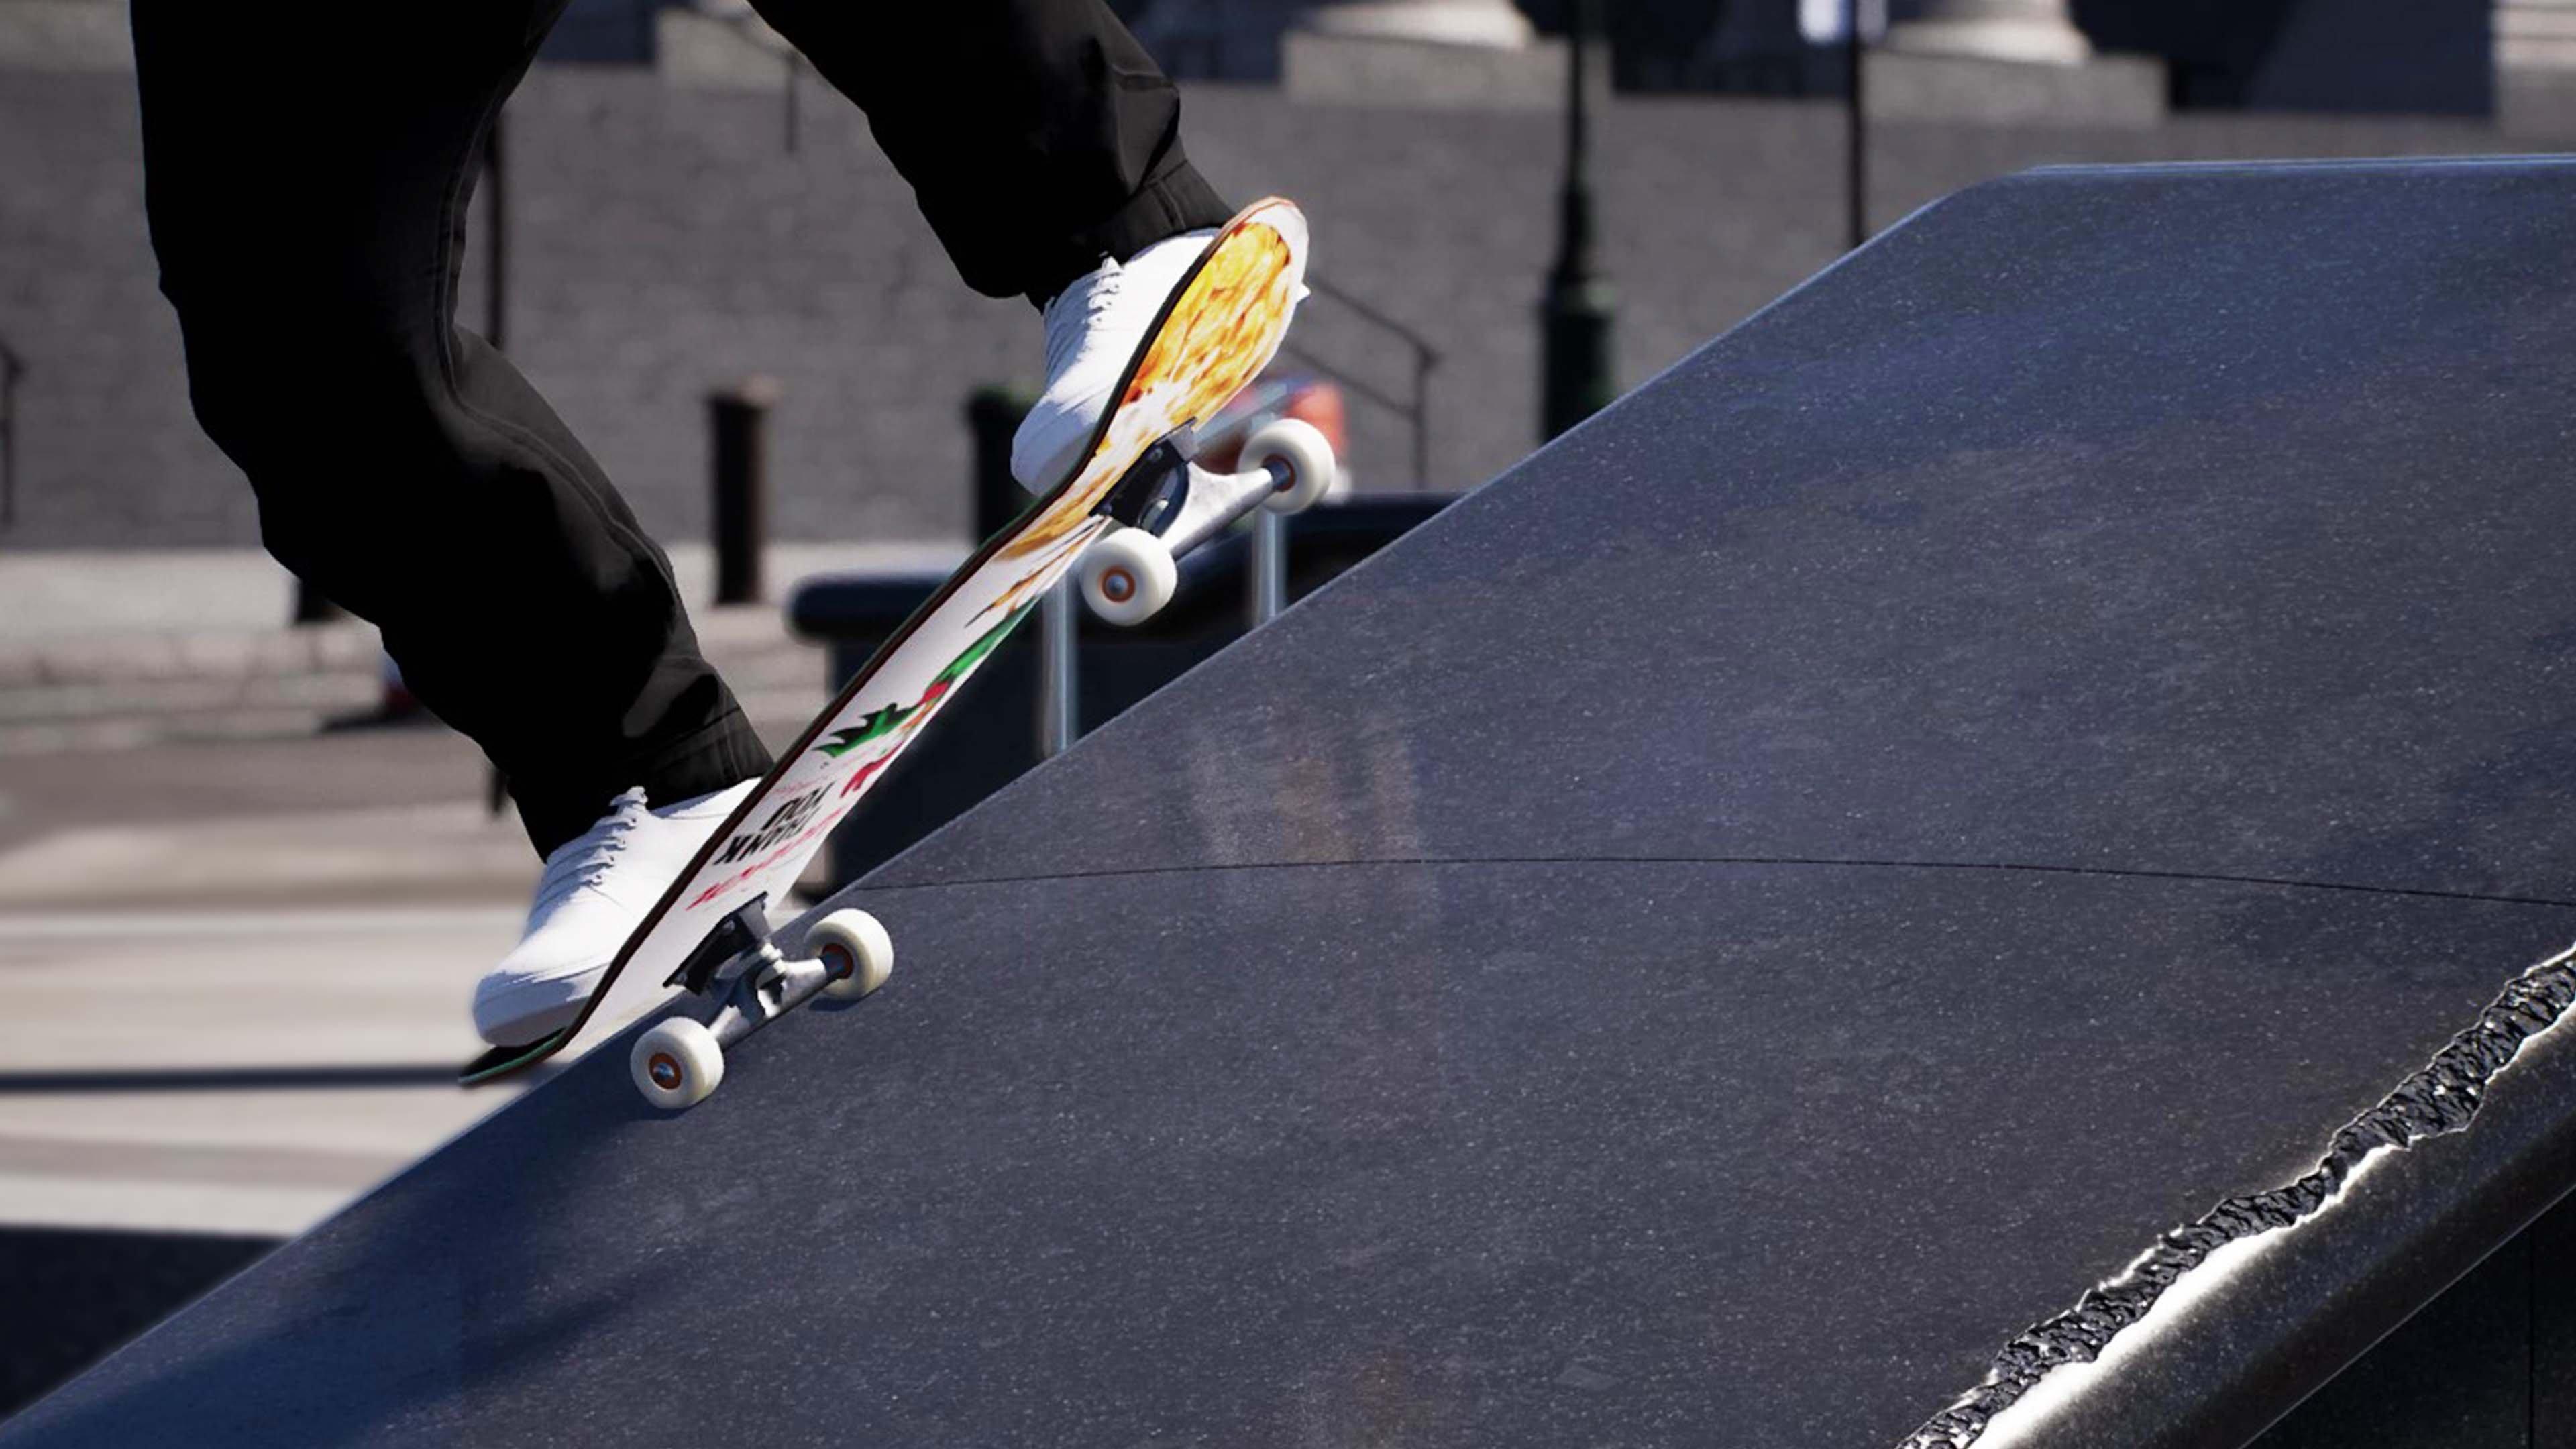 Skate 3 Playstation 3 PS3 EA Sports Skateboarding - Brand New Free Shipping